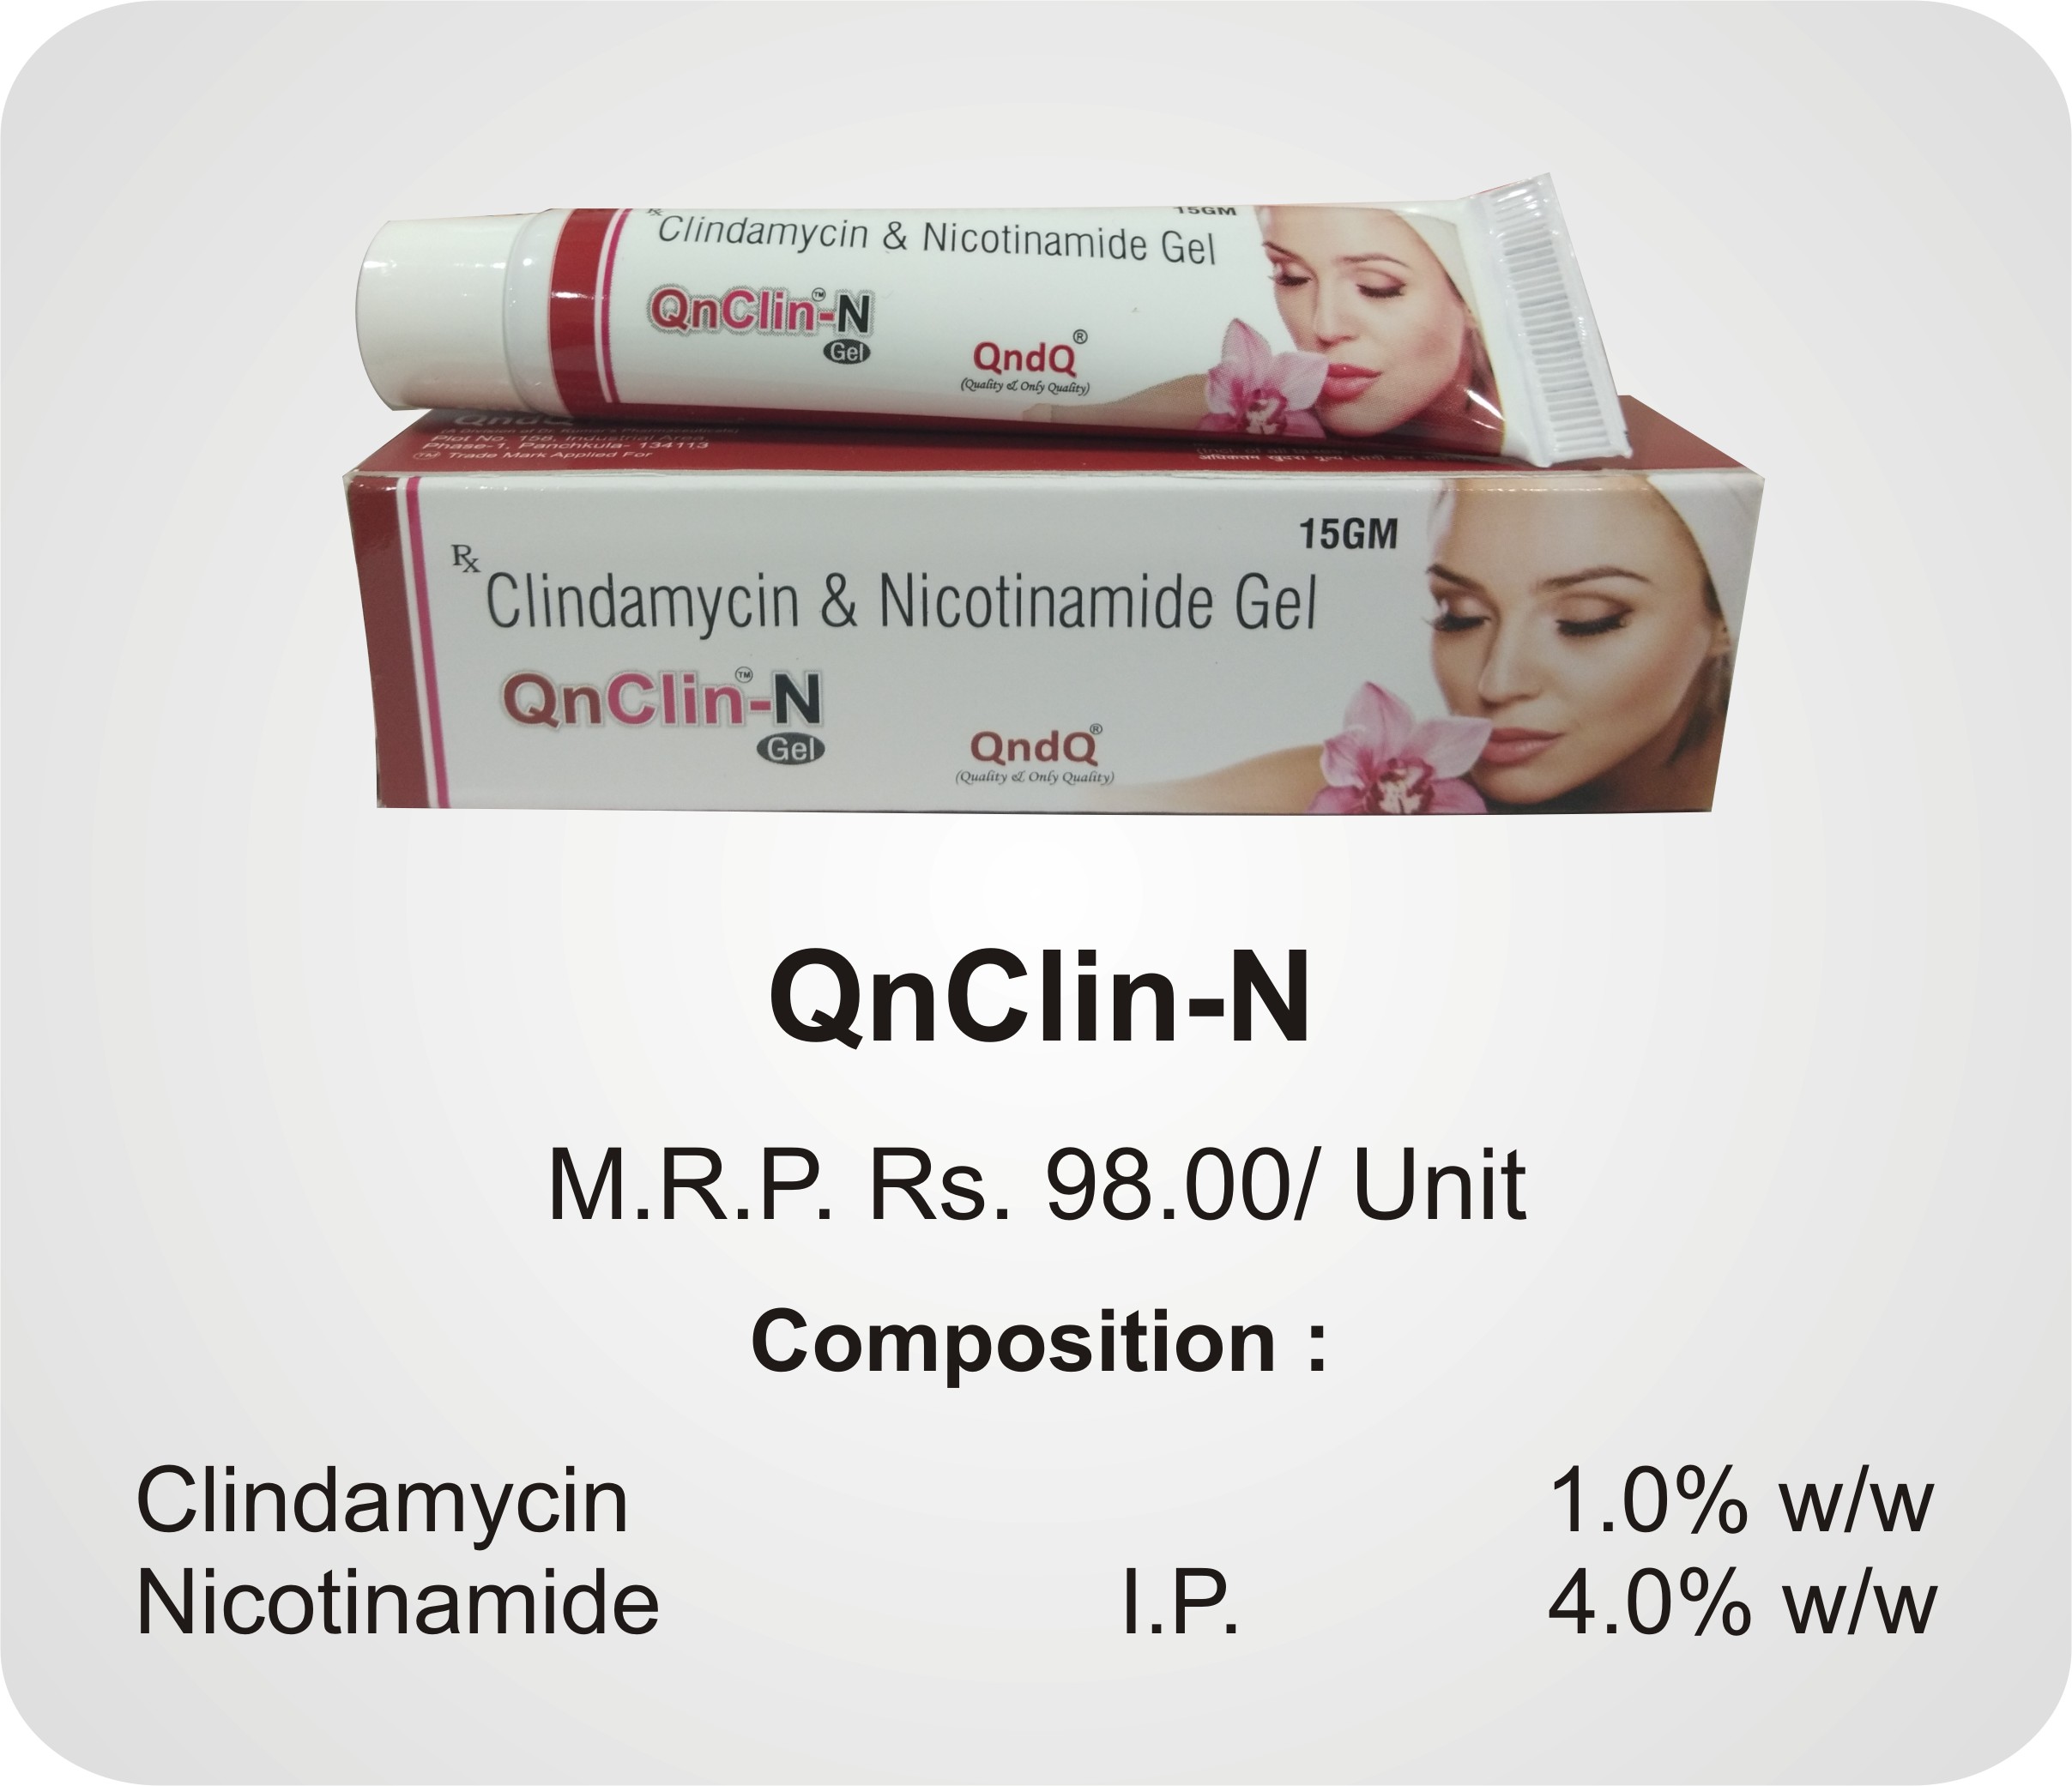 Clindamycin and Nicotinamide Gel